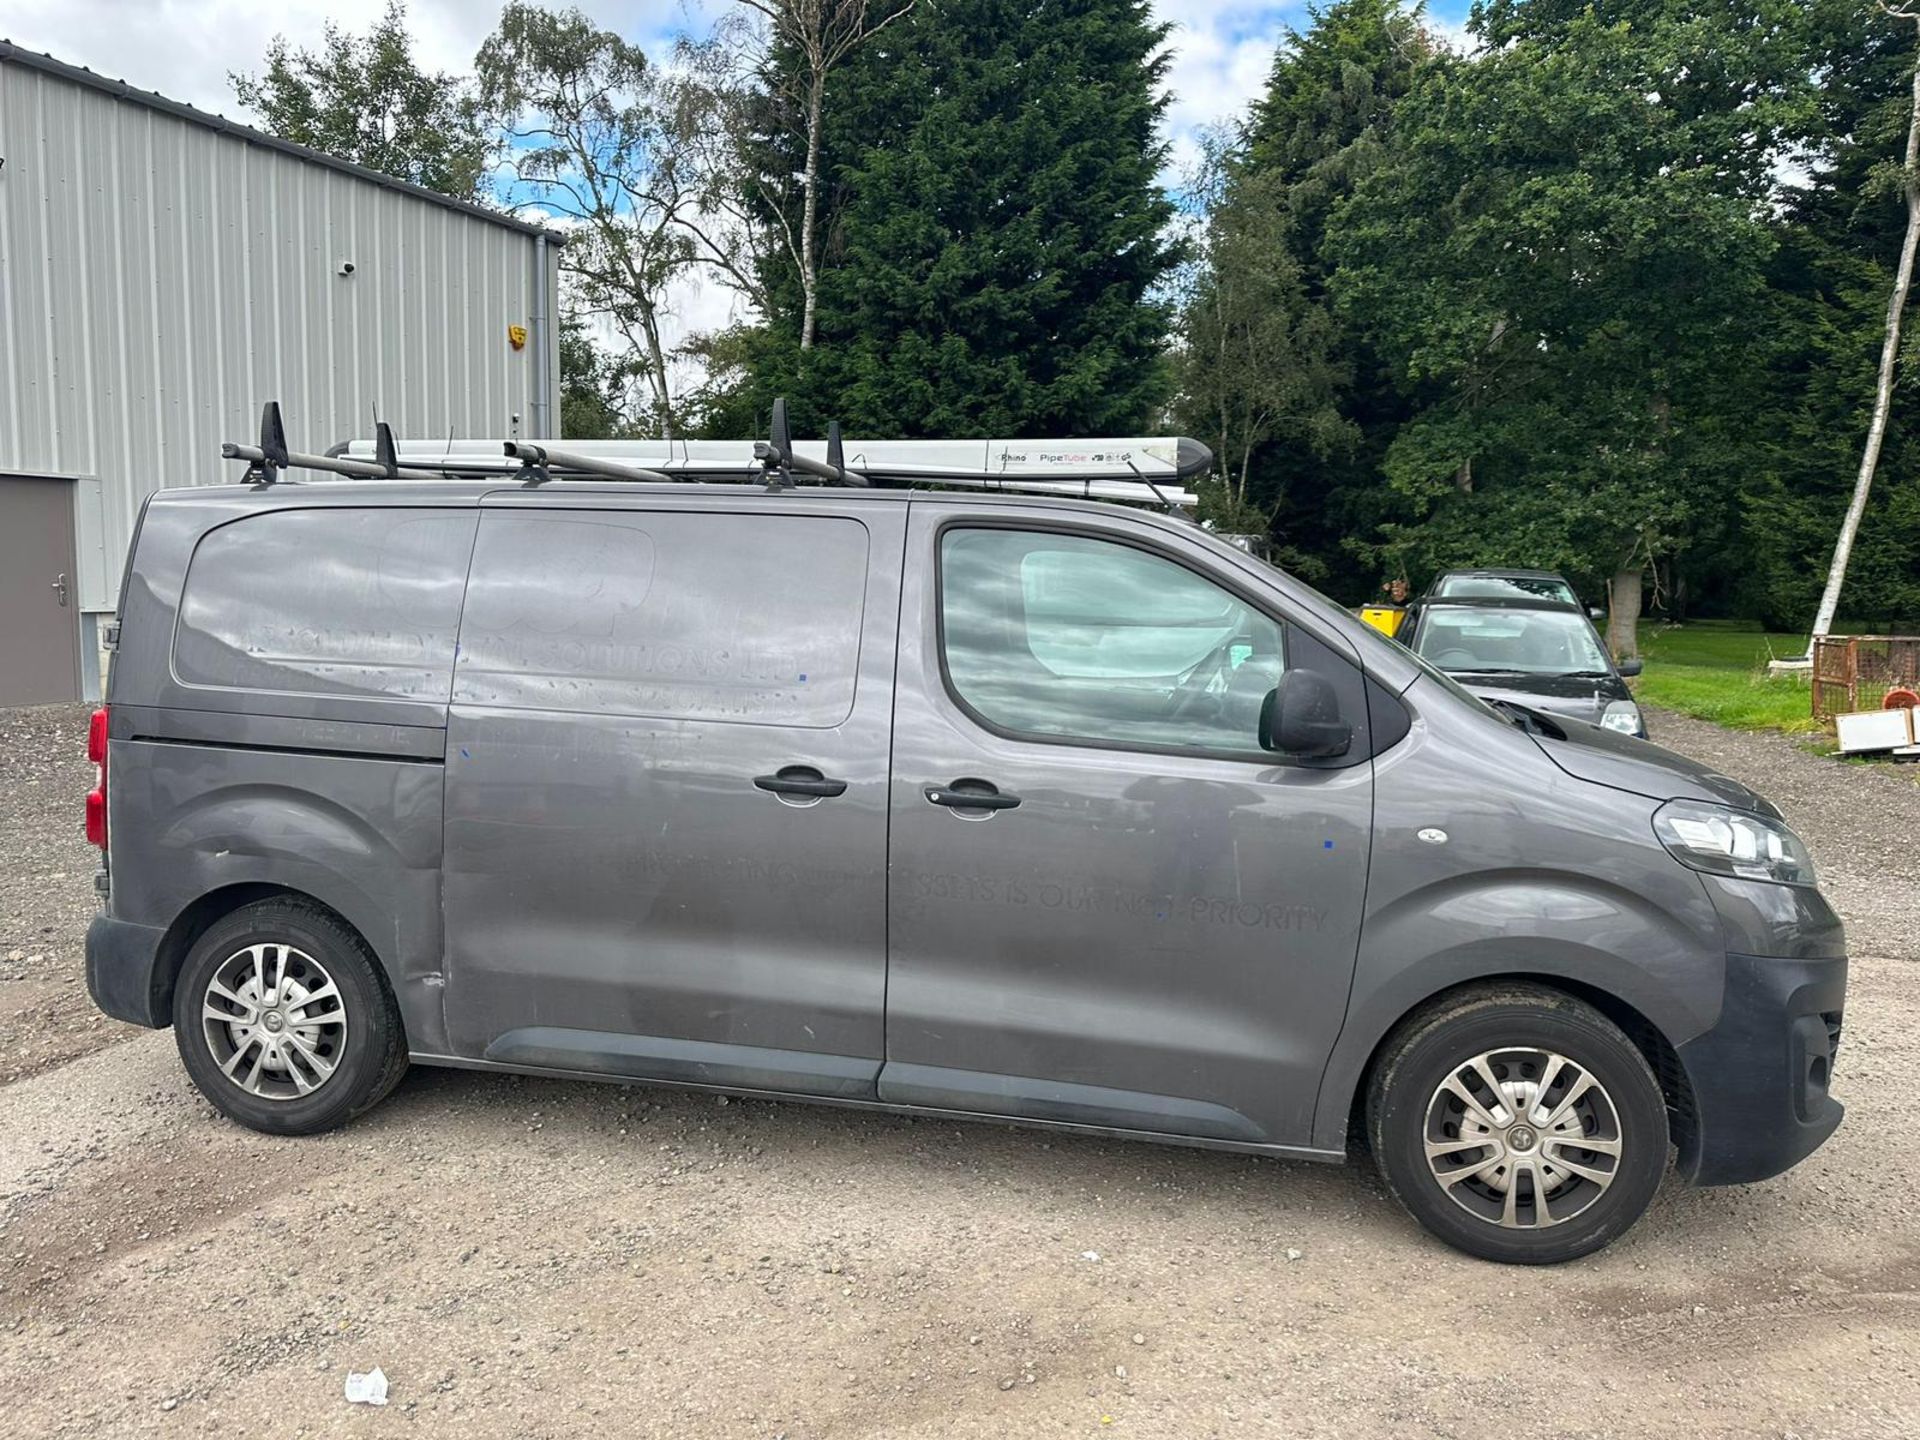 2019 69 Vauxhall vivaro Panel van - 123k miles - Air con - Roof rack - Ply lined - Image 3 of 5